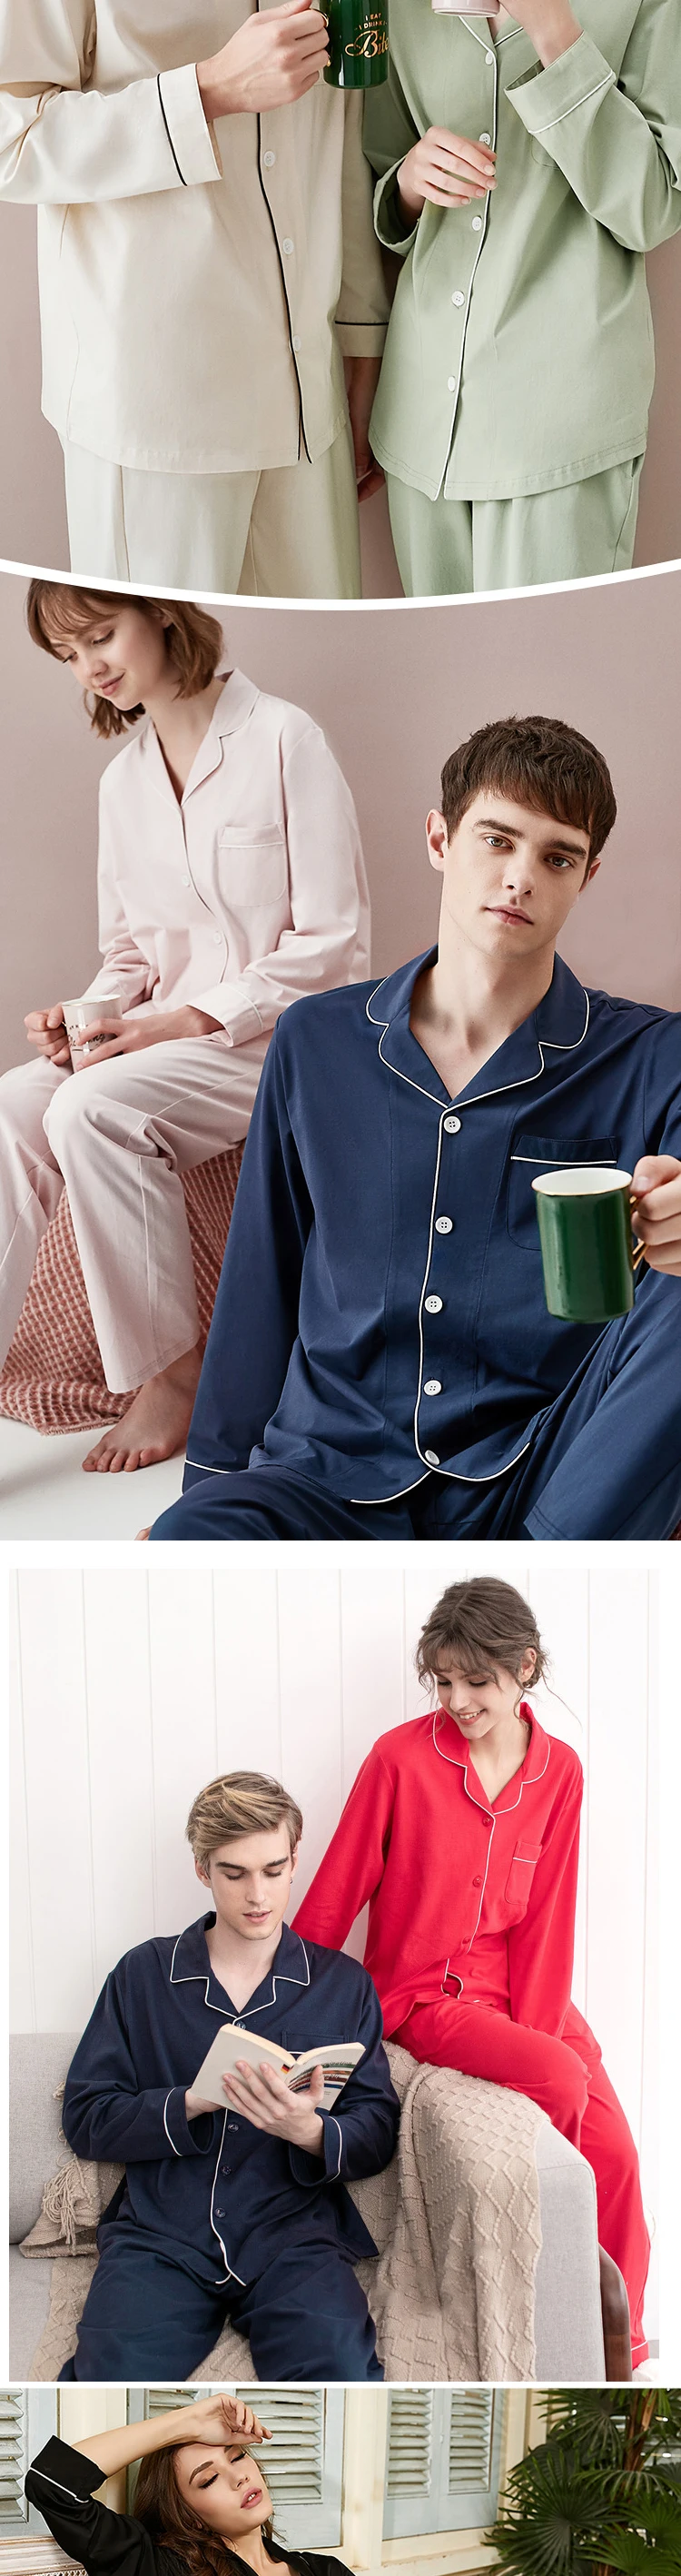 Enerup Fashion Copper Pe Bamboo Women's Half-Length Sleepwear Wholesale China Long Nightgown Pajamas Set